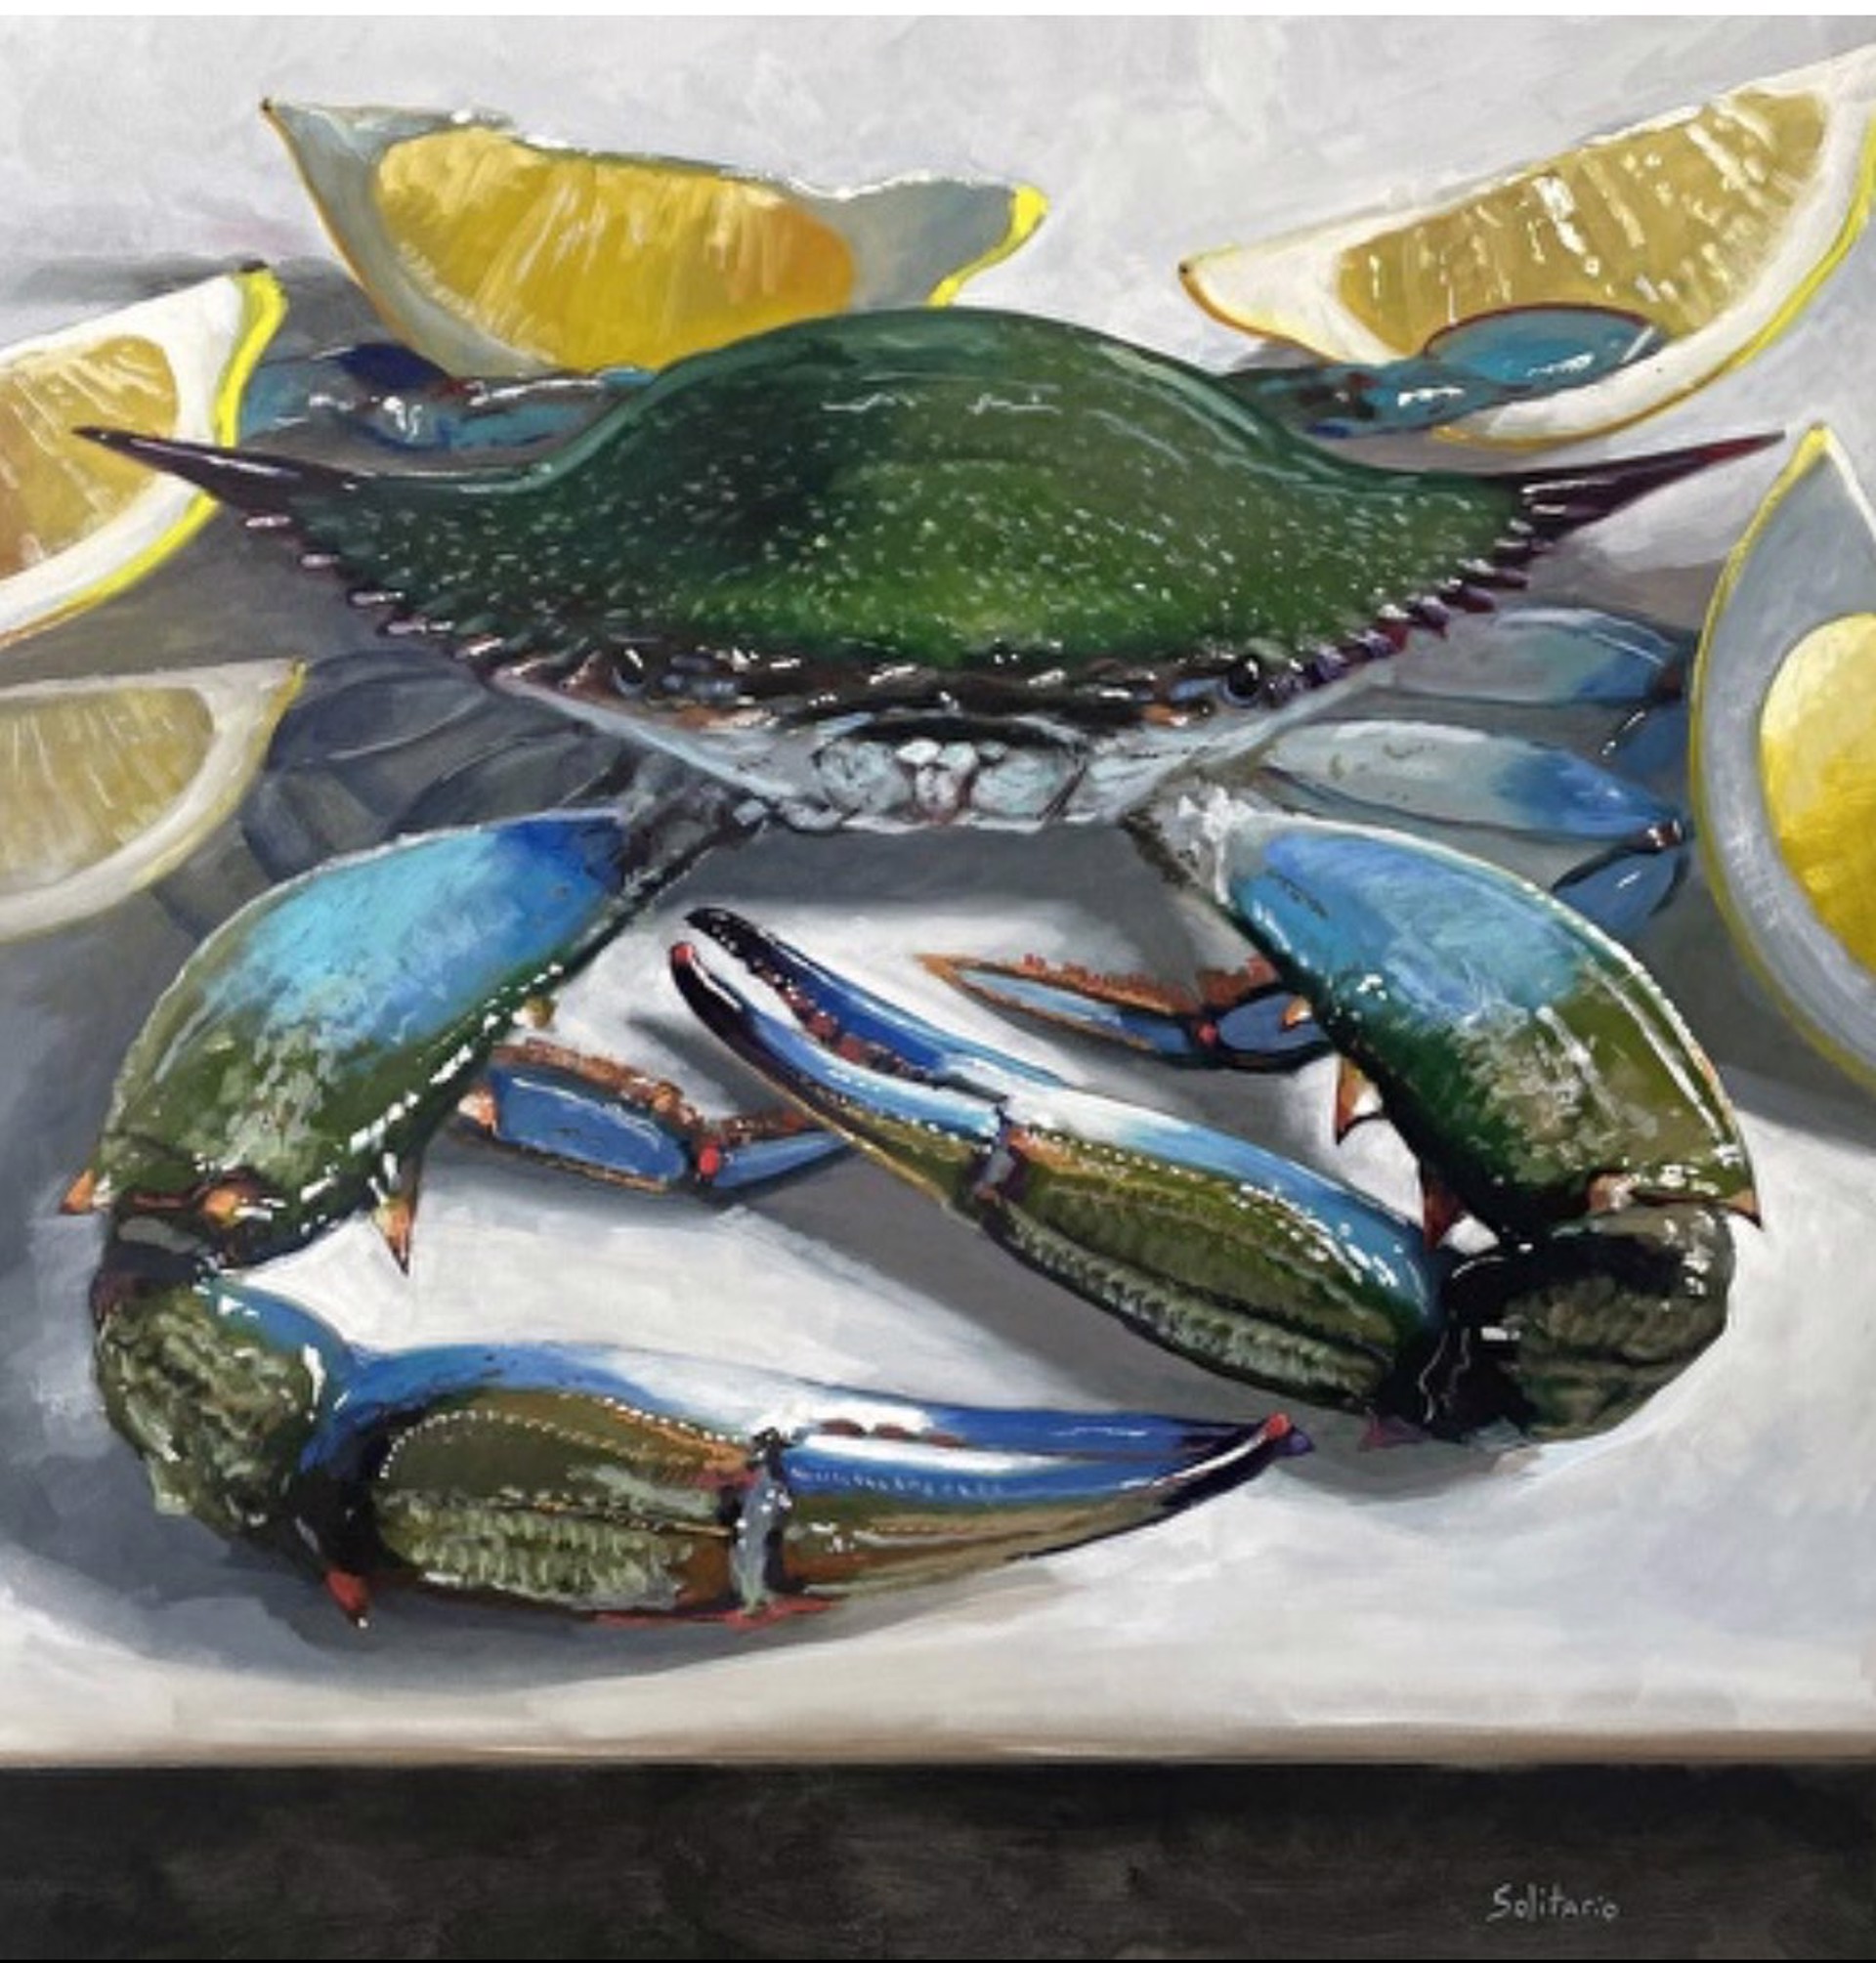 Blue Crab & Lemons by Billy Solitario